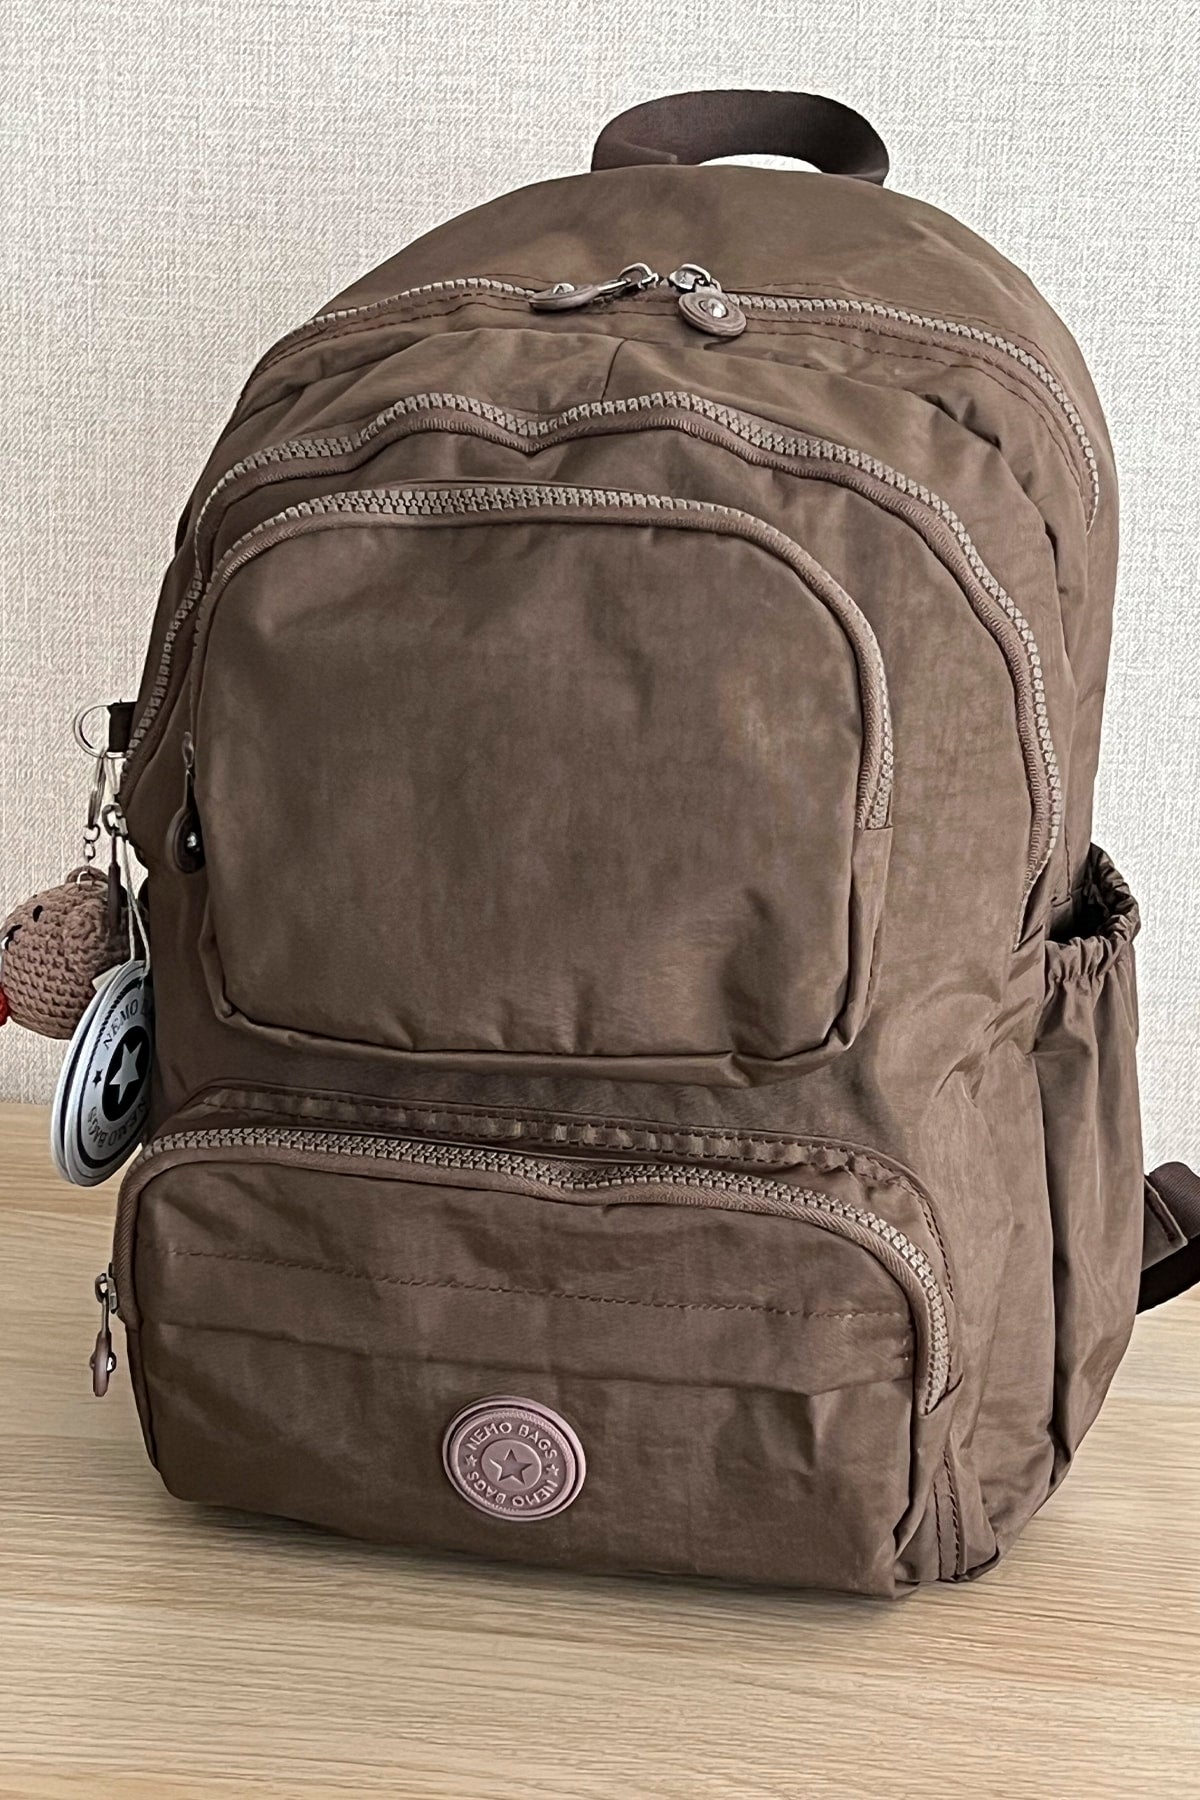 Dark Mink Backpack School Bag 14 Inch Laptop Bag Nemobags Travel Bag 18 Lt 40x30x15cm